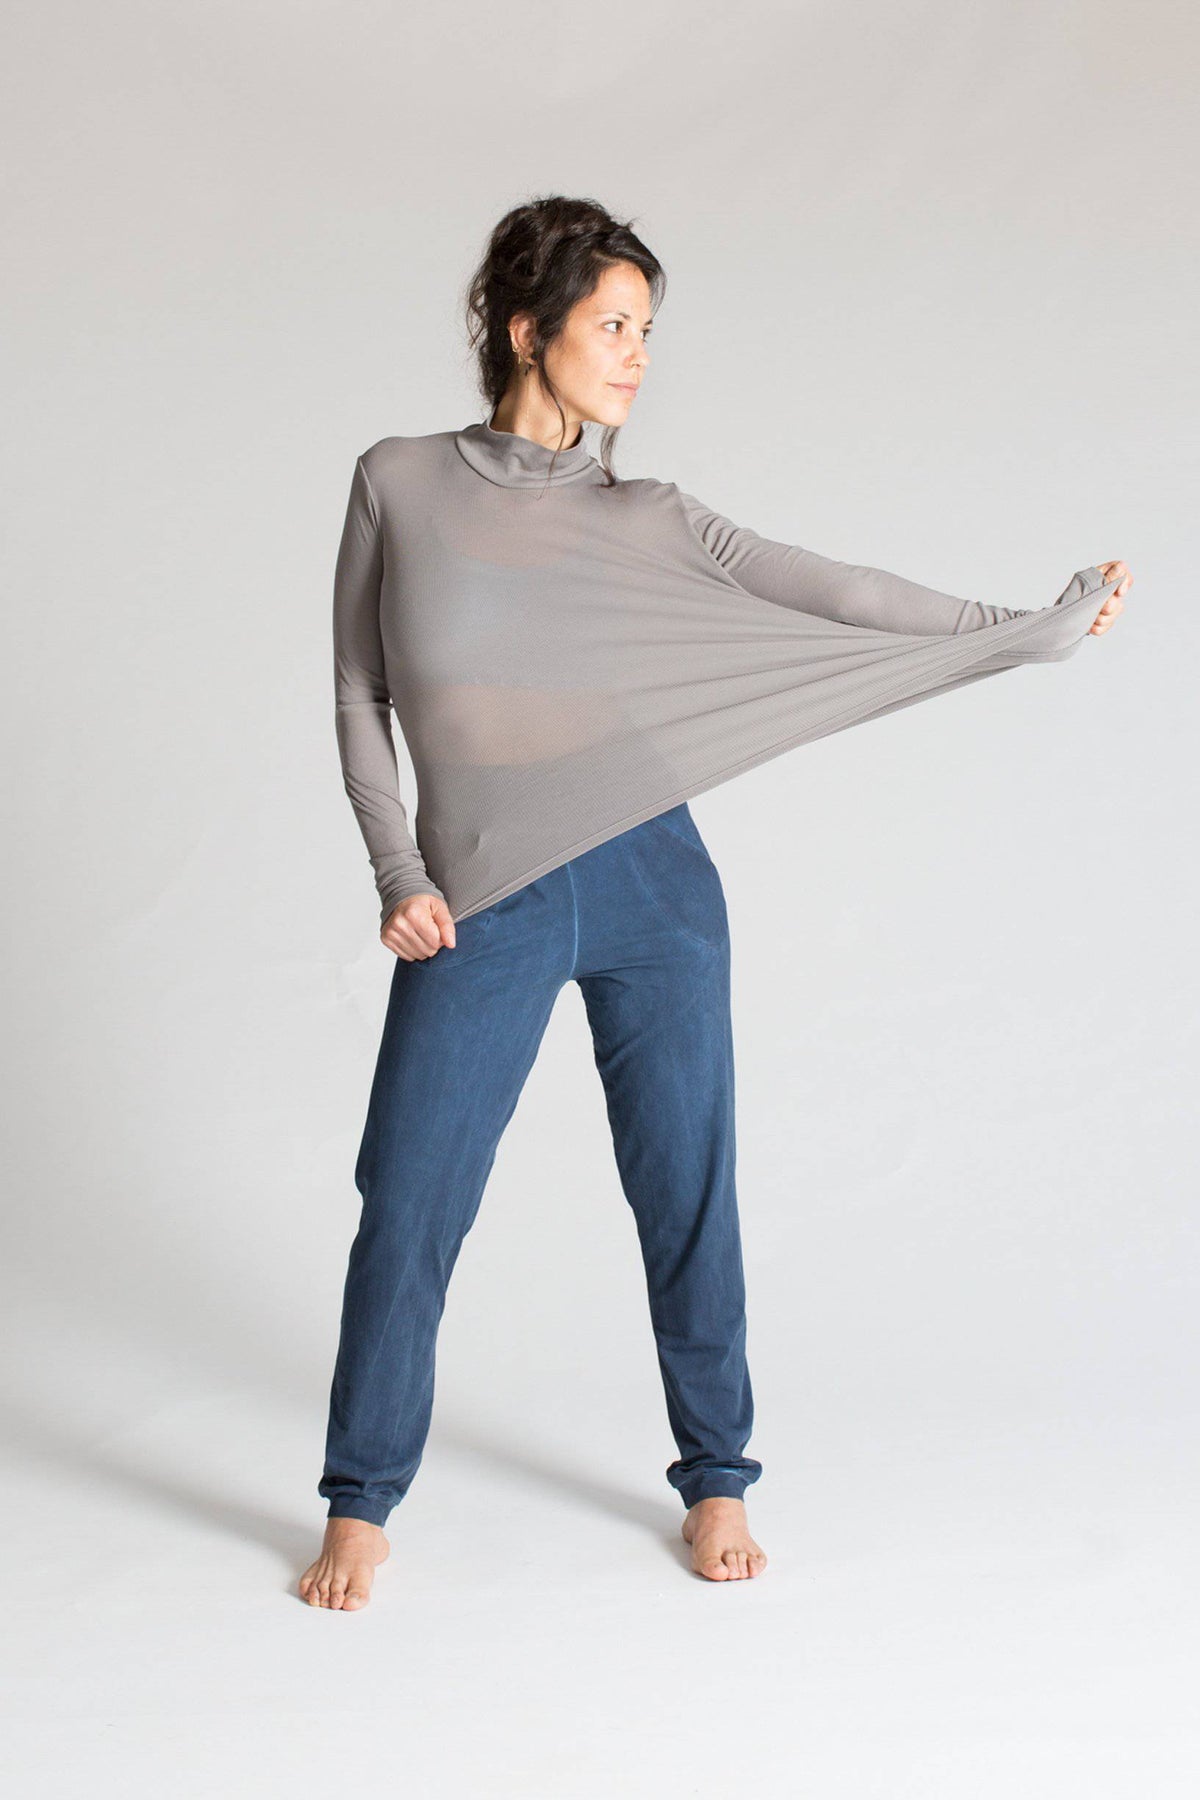 Delicate Cotton Rib Turtleneck Top - womens clothing - Ripple Yoga Wear